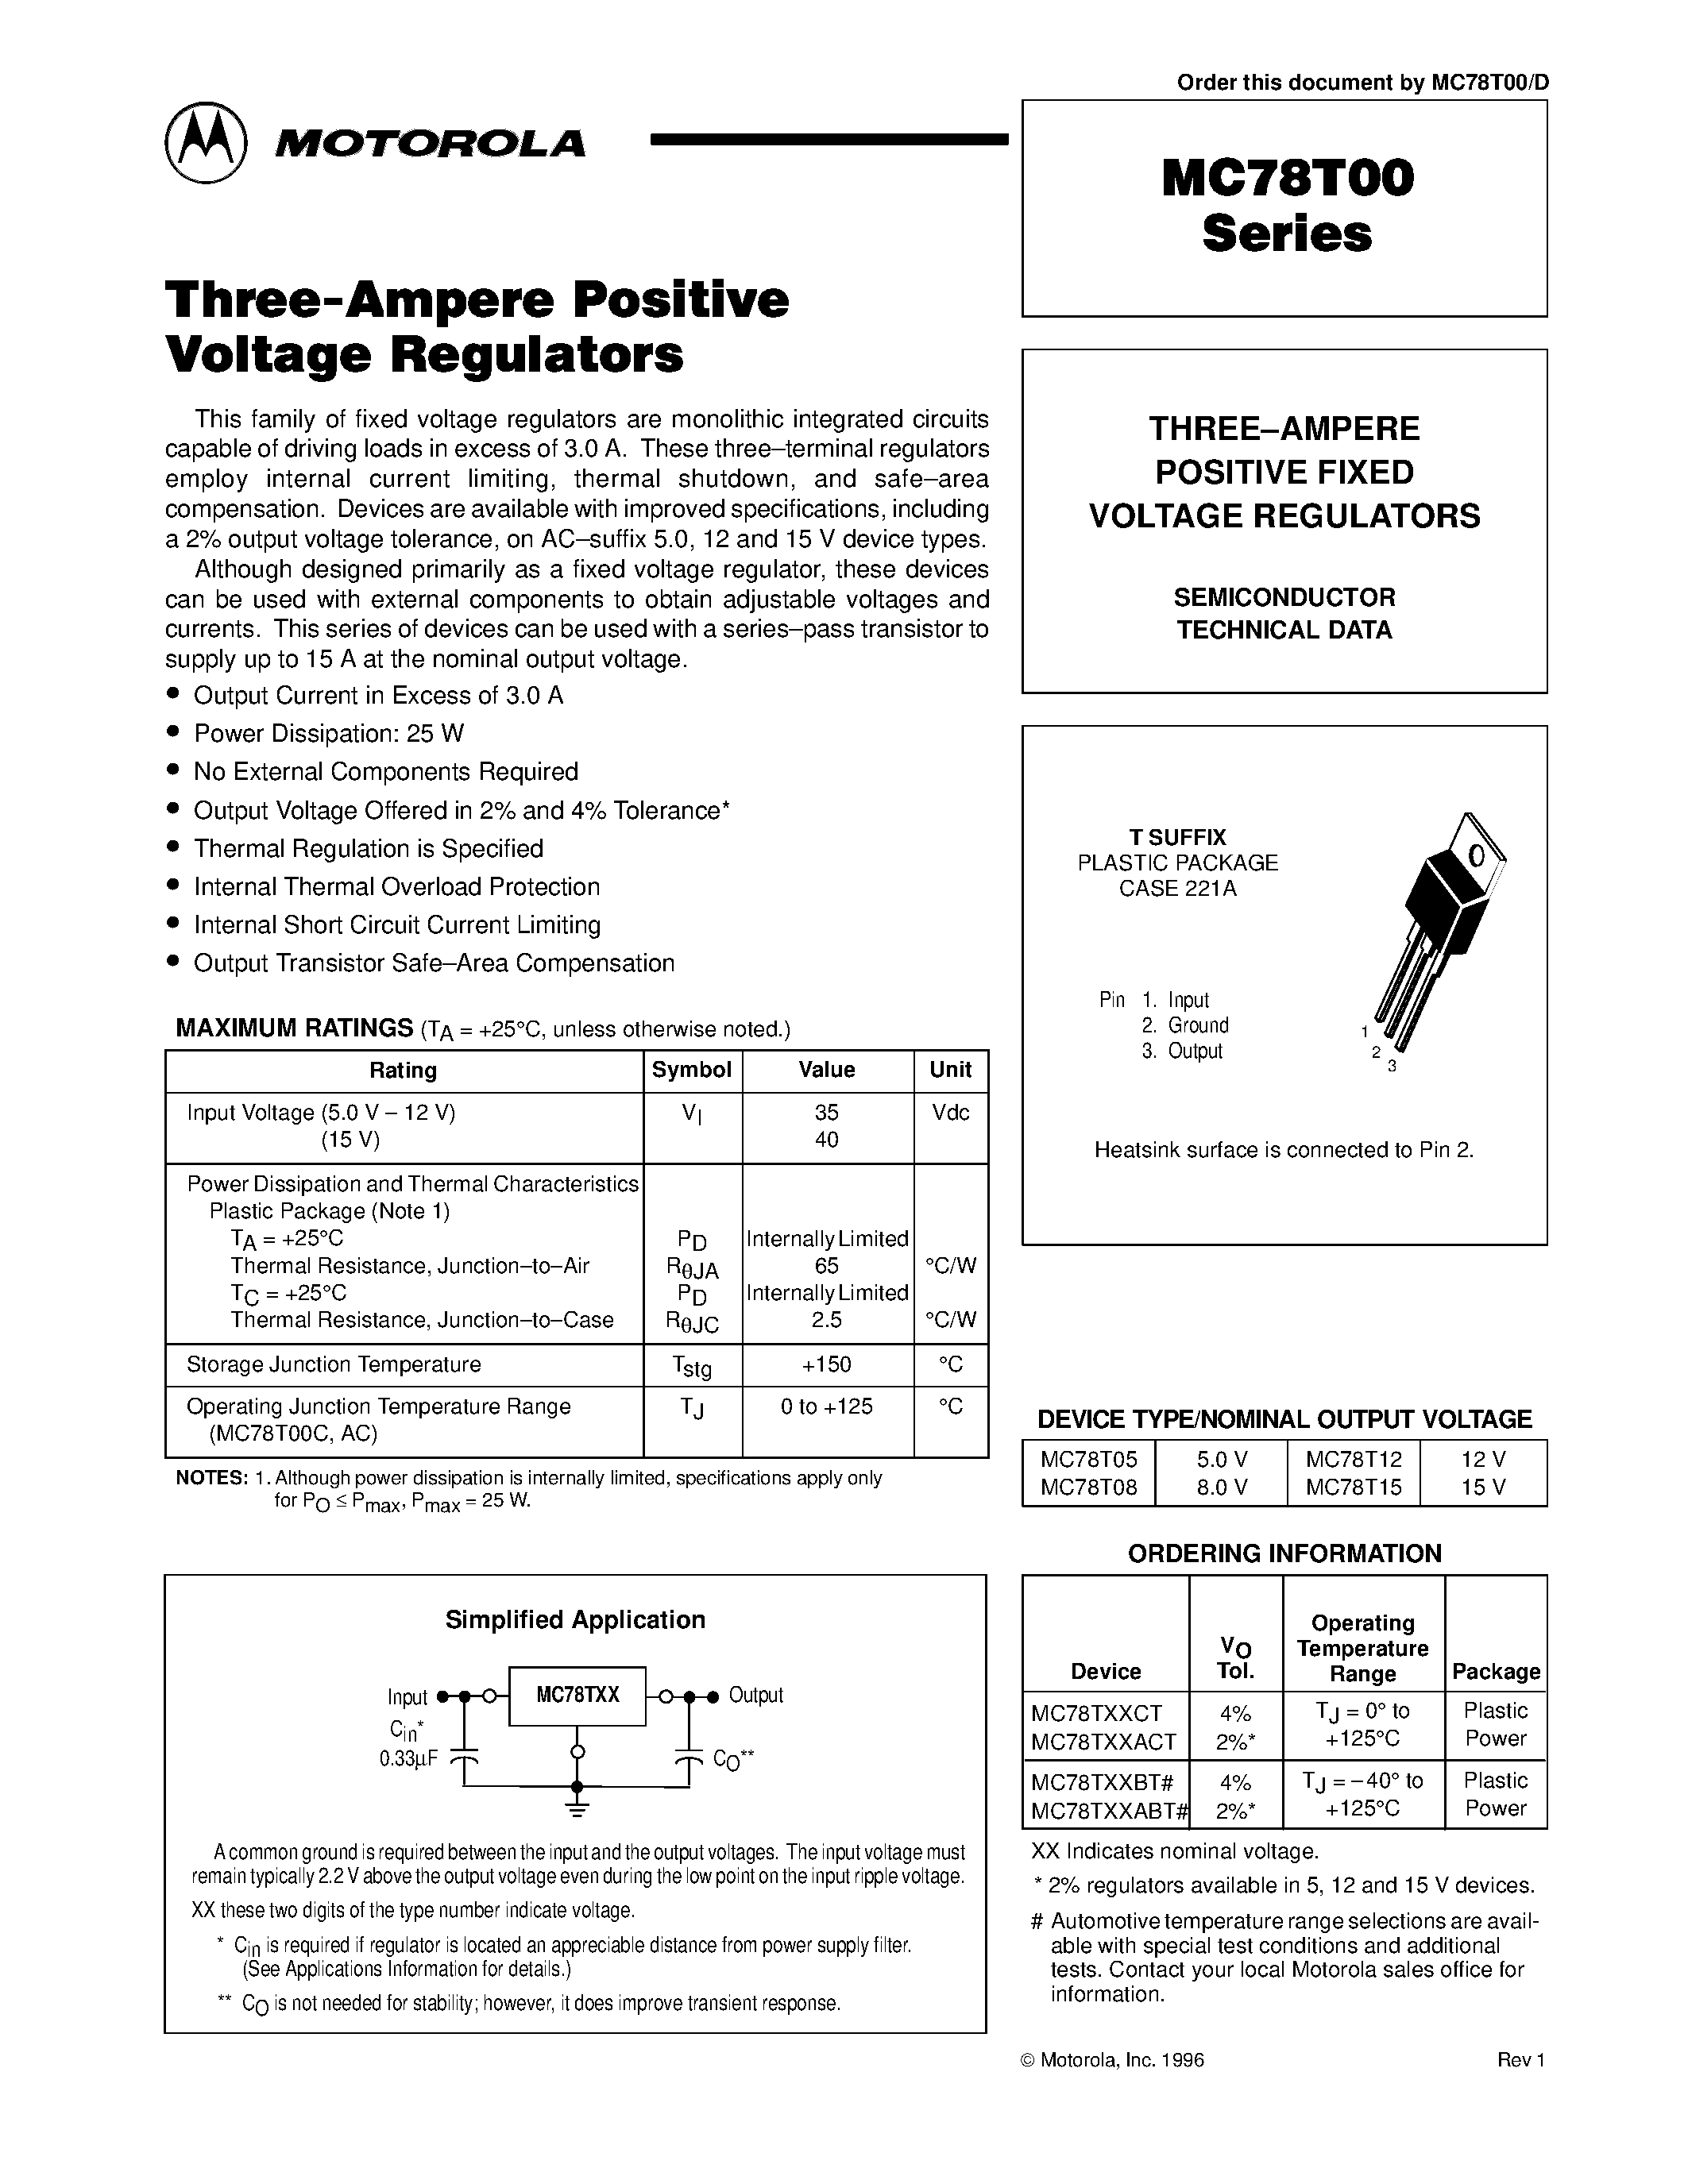 Datasheet MC78T15ABT - THREE-AMPERE POSITIVE FIXED VOLTAGE REGULATORS page 1